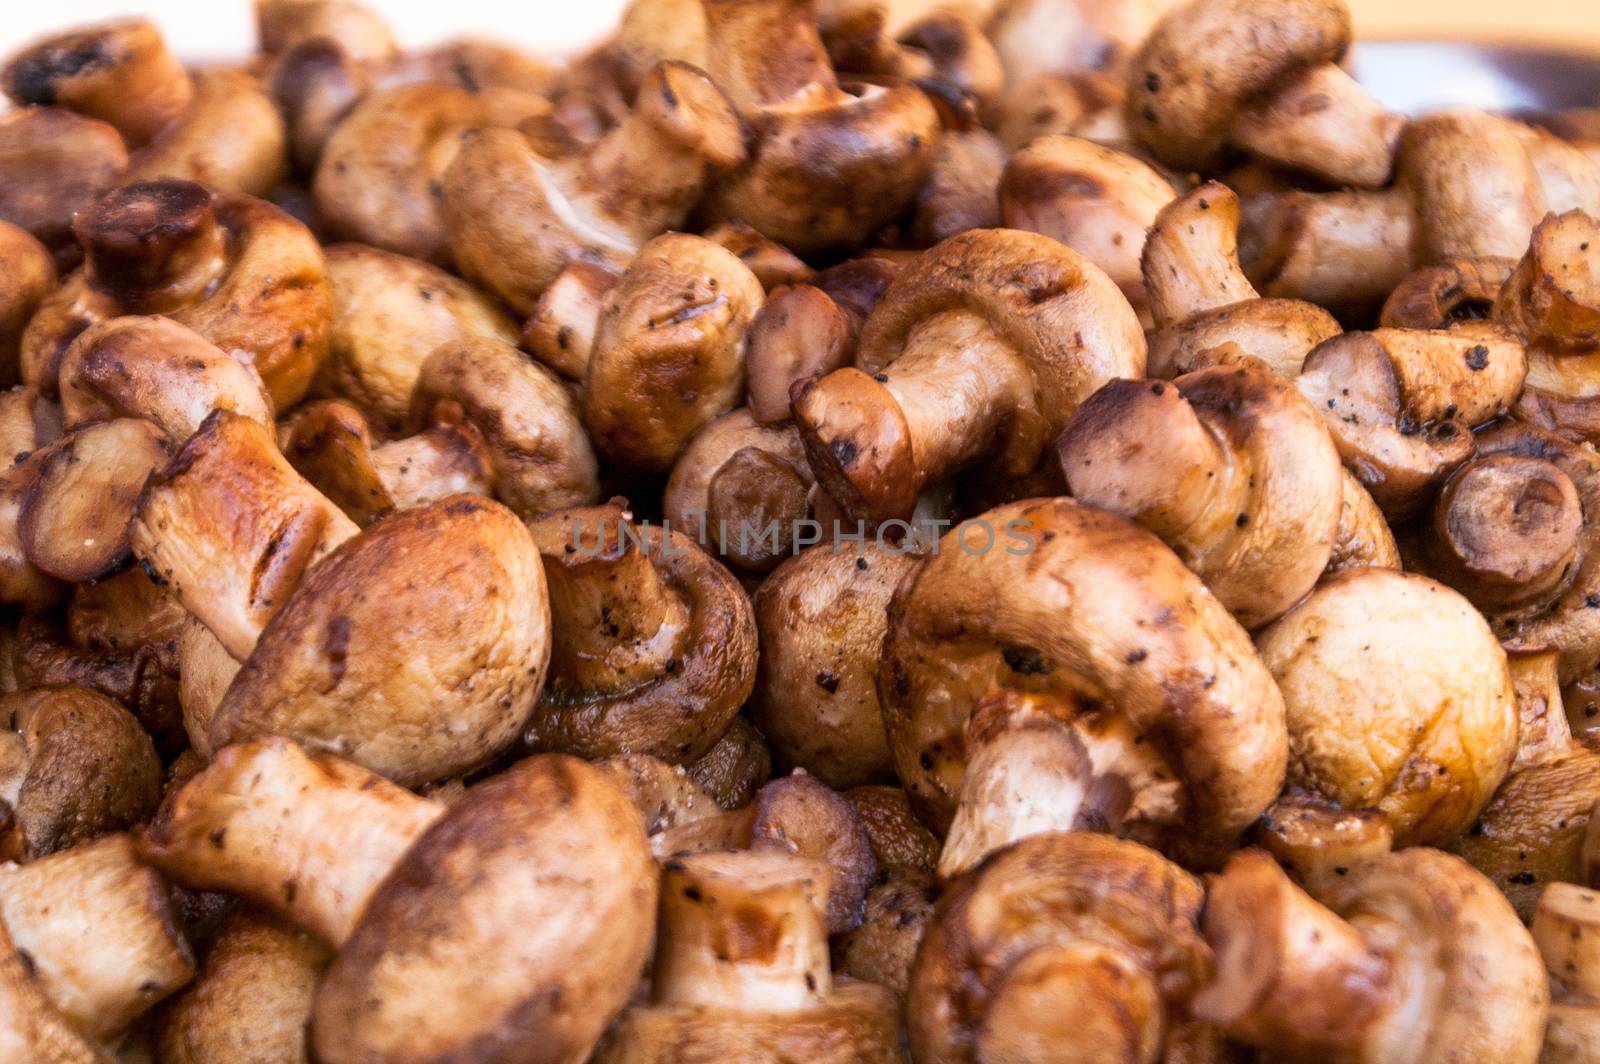 shampyona mushrooms grill  by antonius_